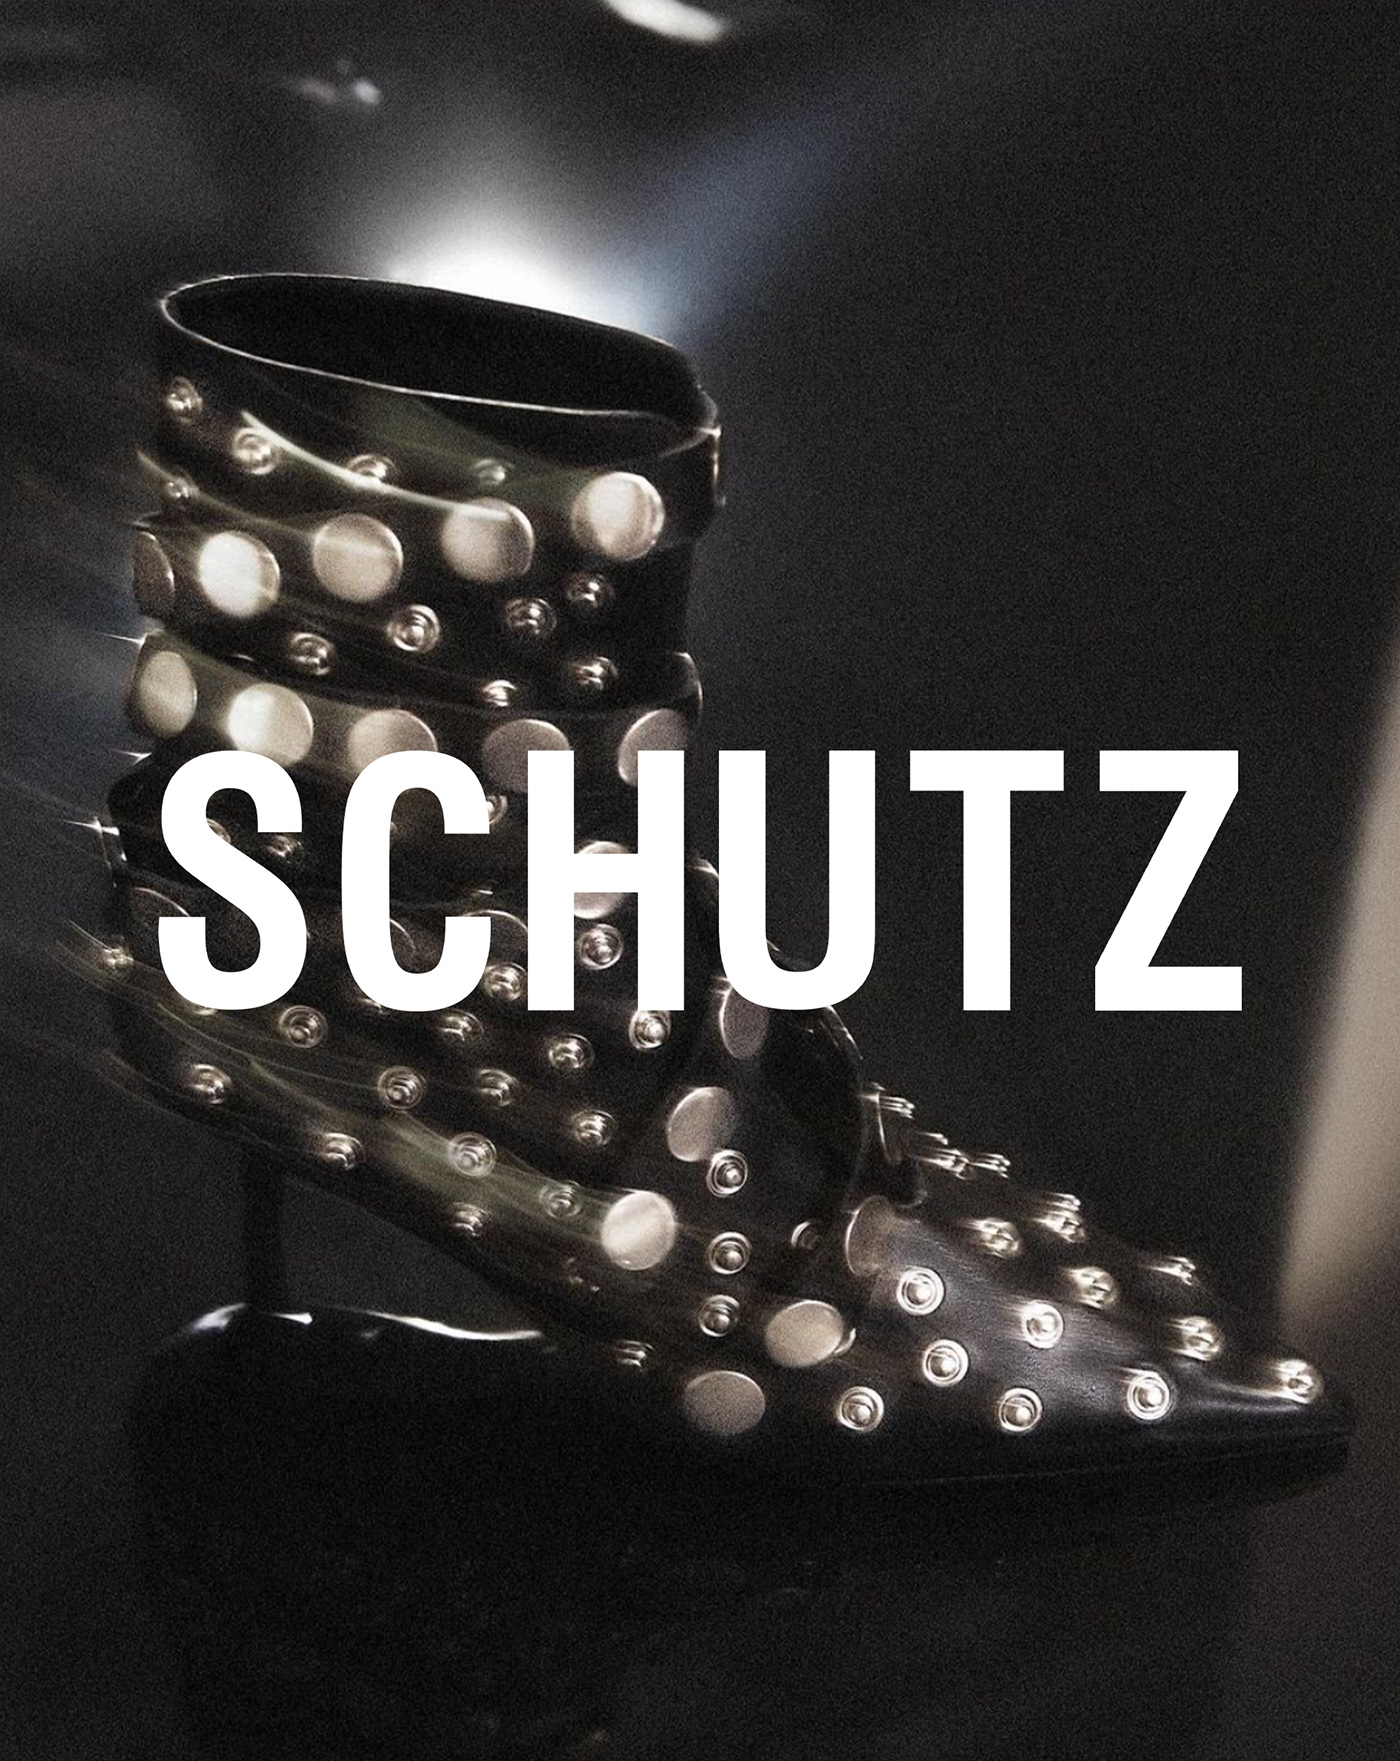 schultz still life art direction  shoes Still Photography  Fashion  editorial